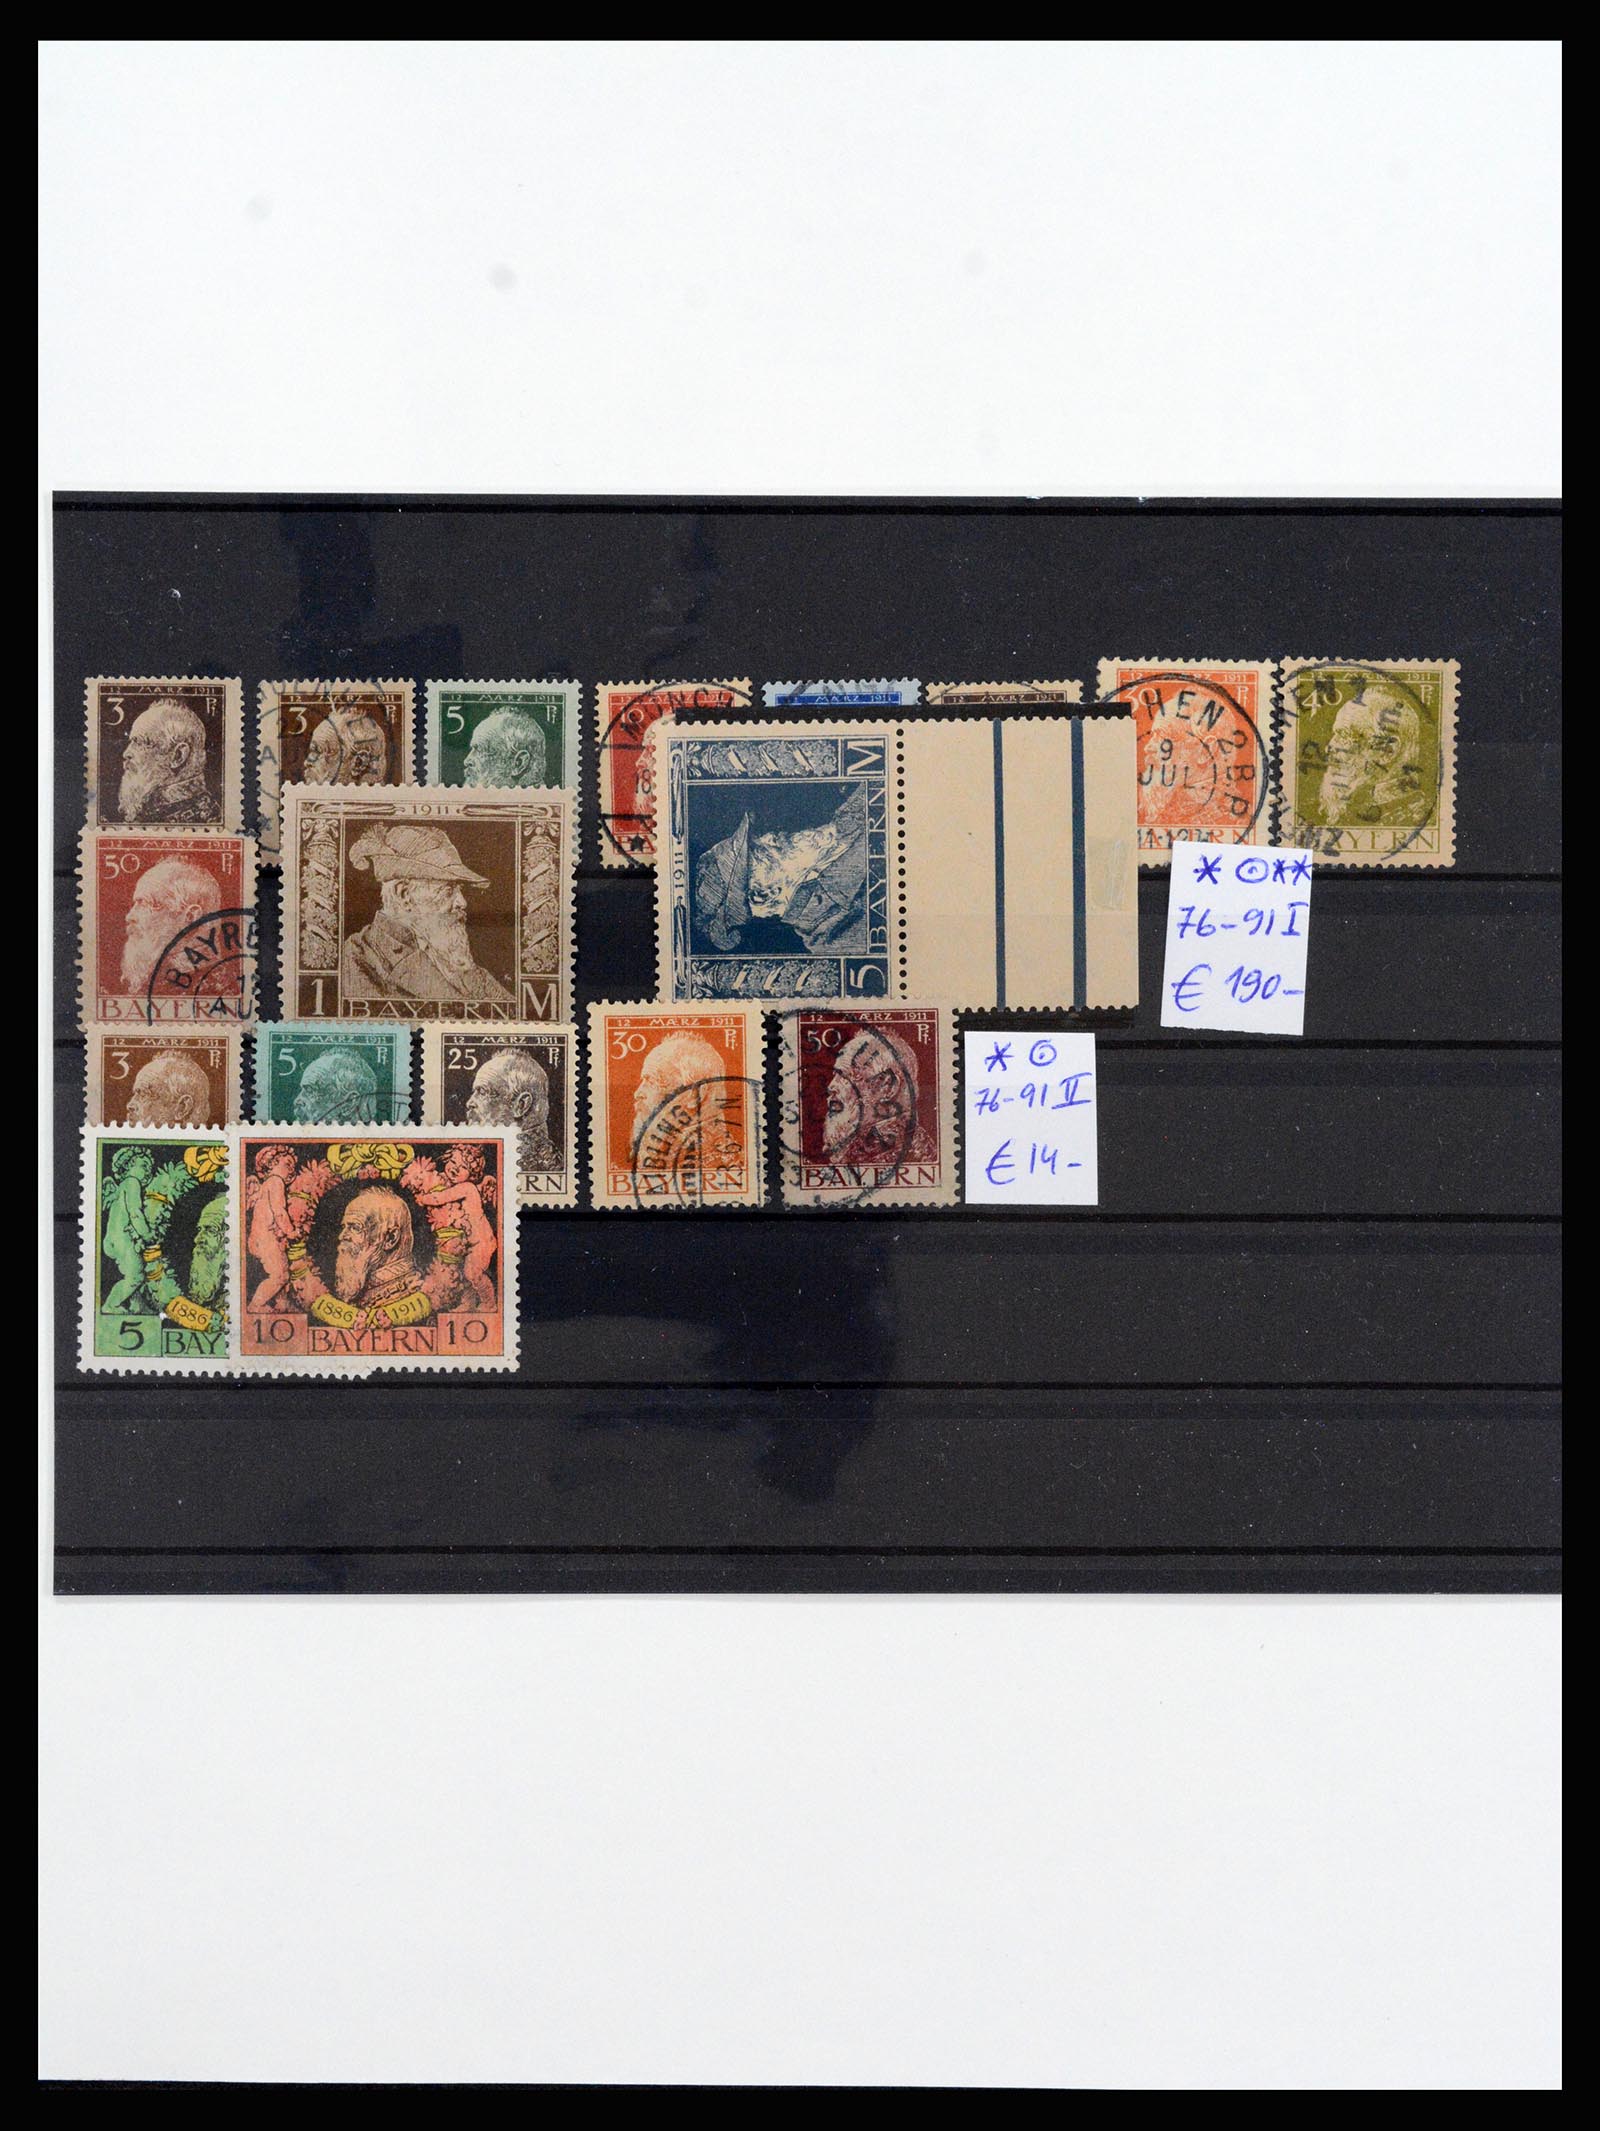 37255 012 - Stamp collection 37255 Bavaria 1849-1920.